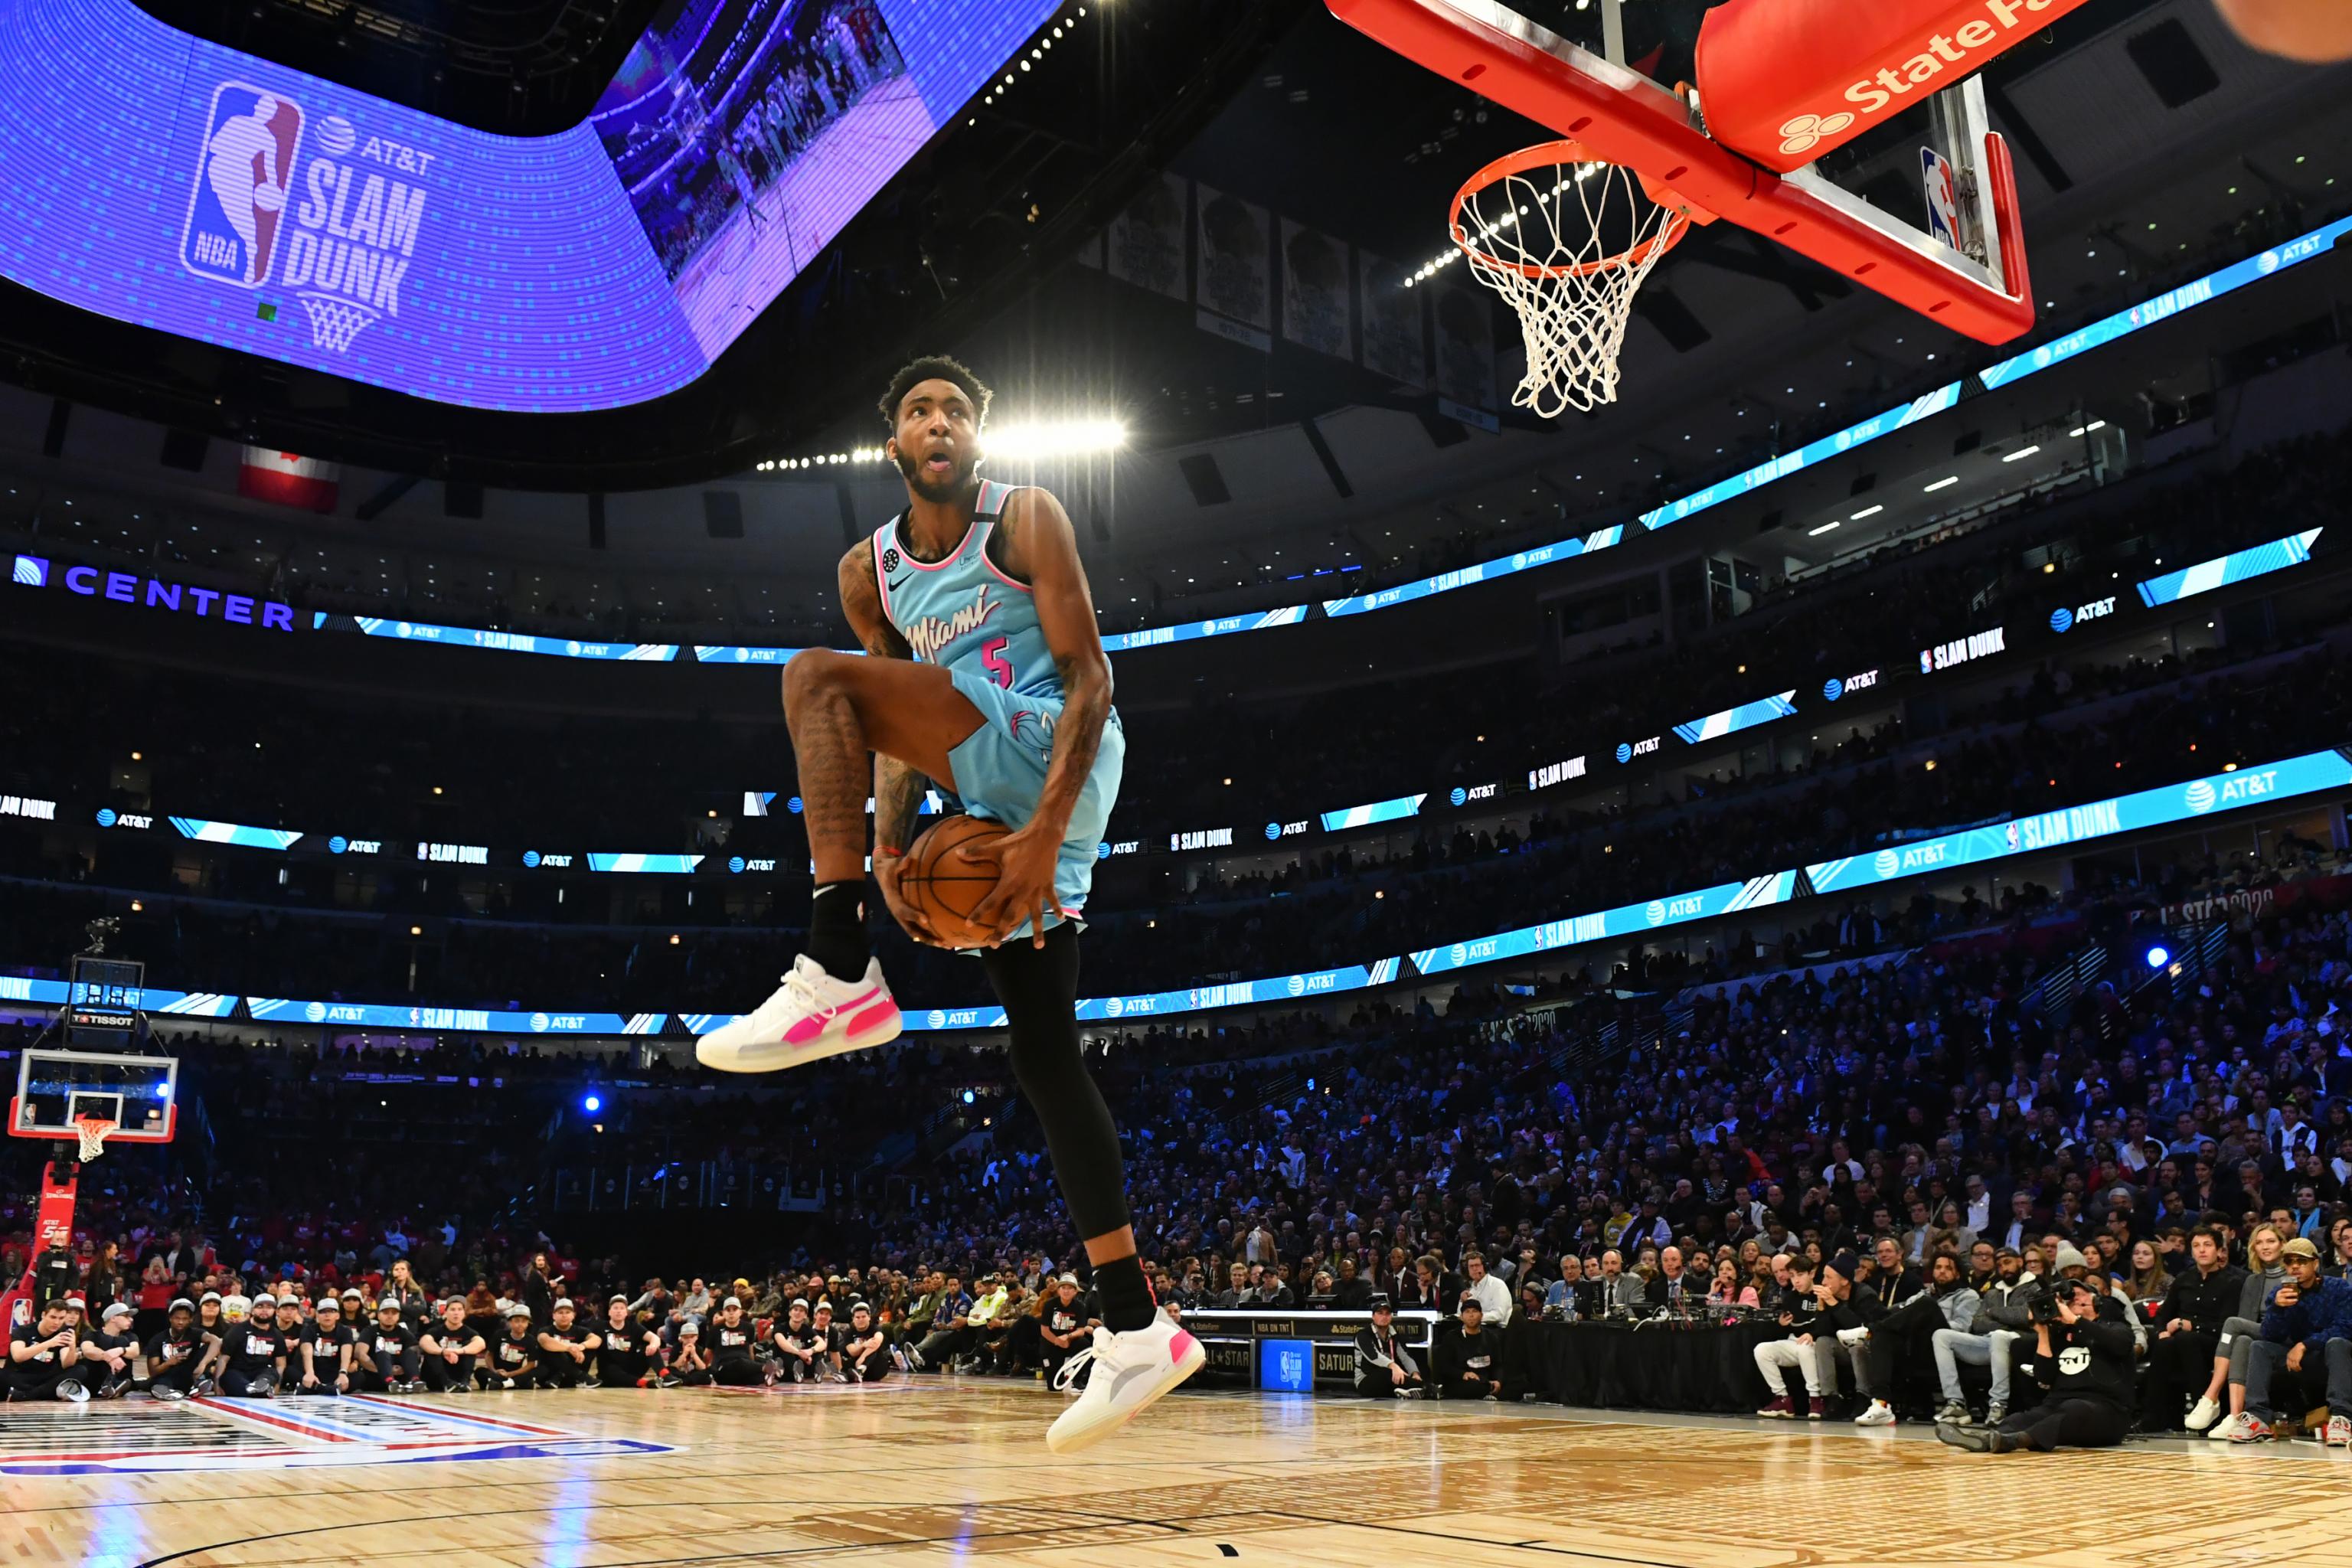 Derrick Jones Jr. wins the NBA Dunk Contest on controversial last dunk